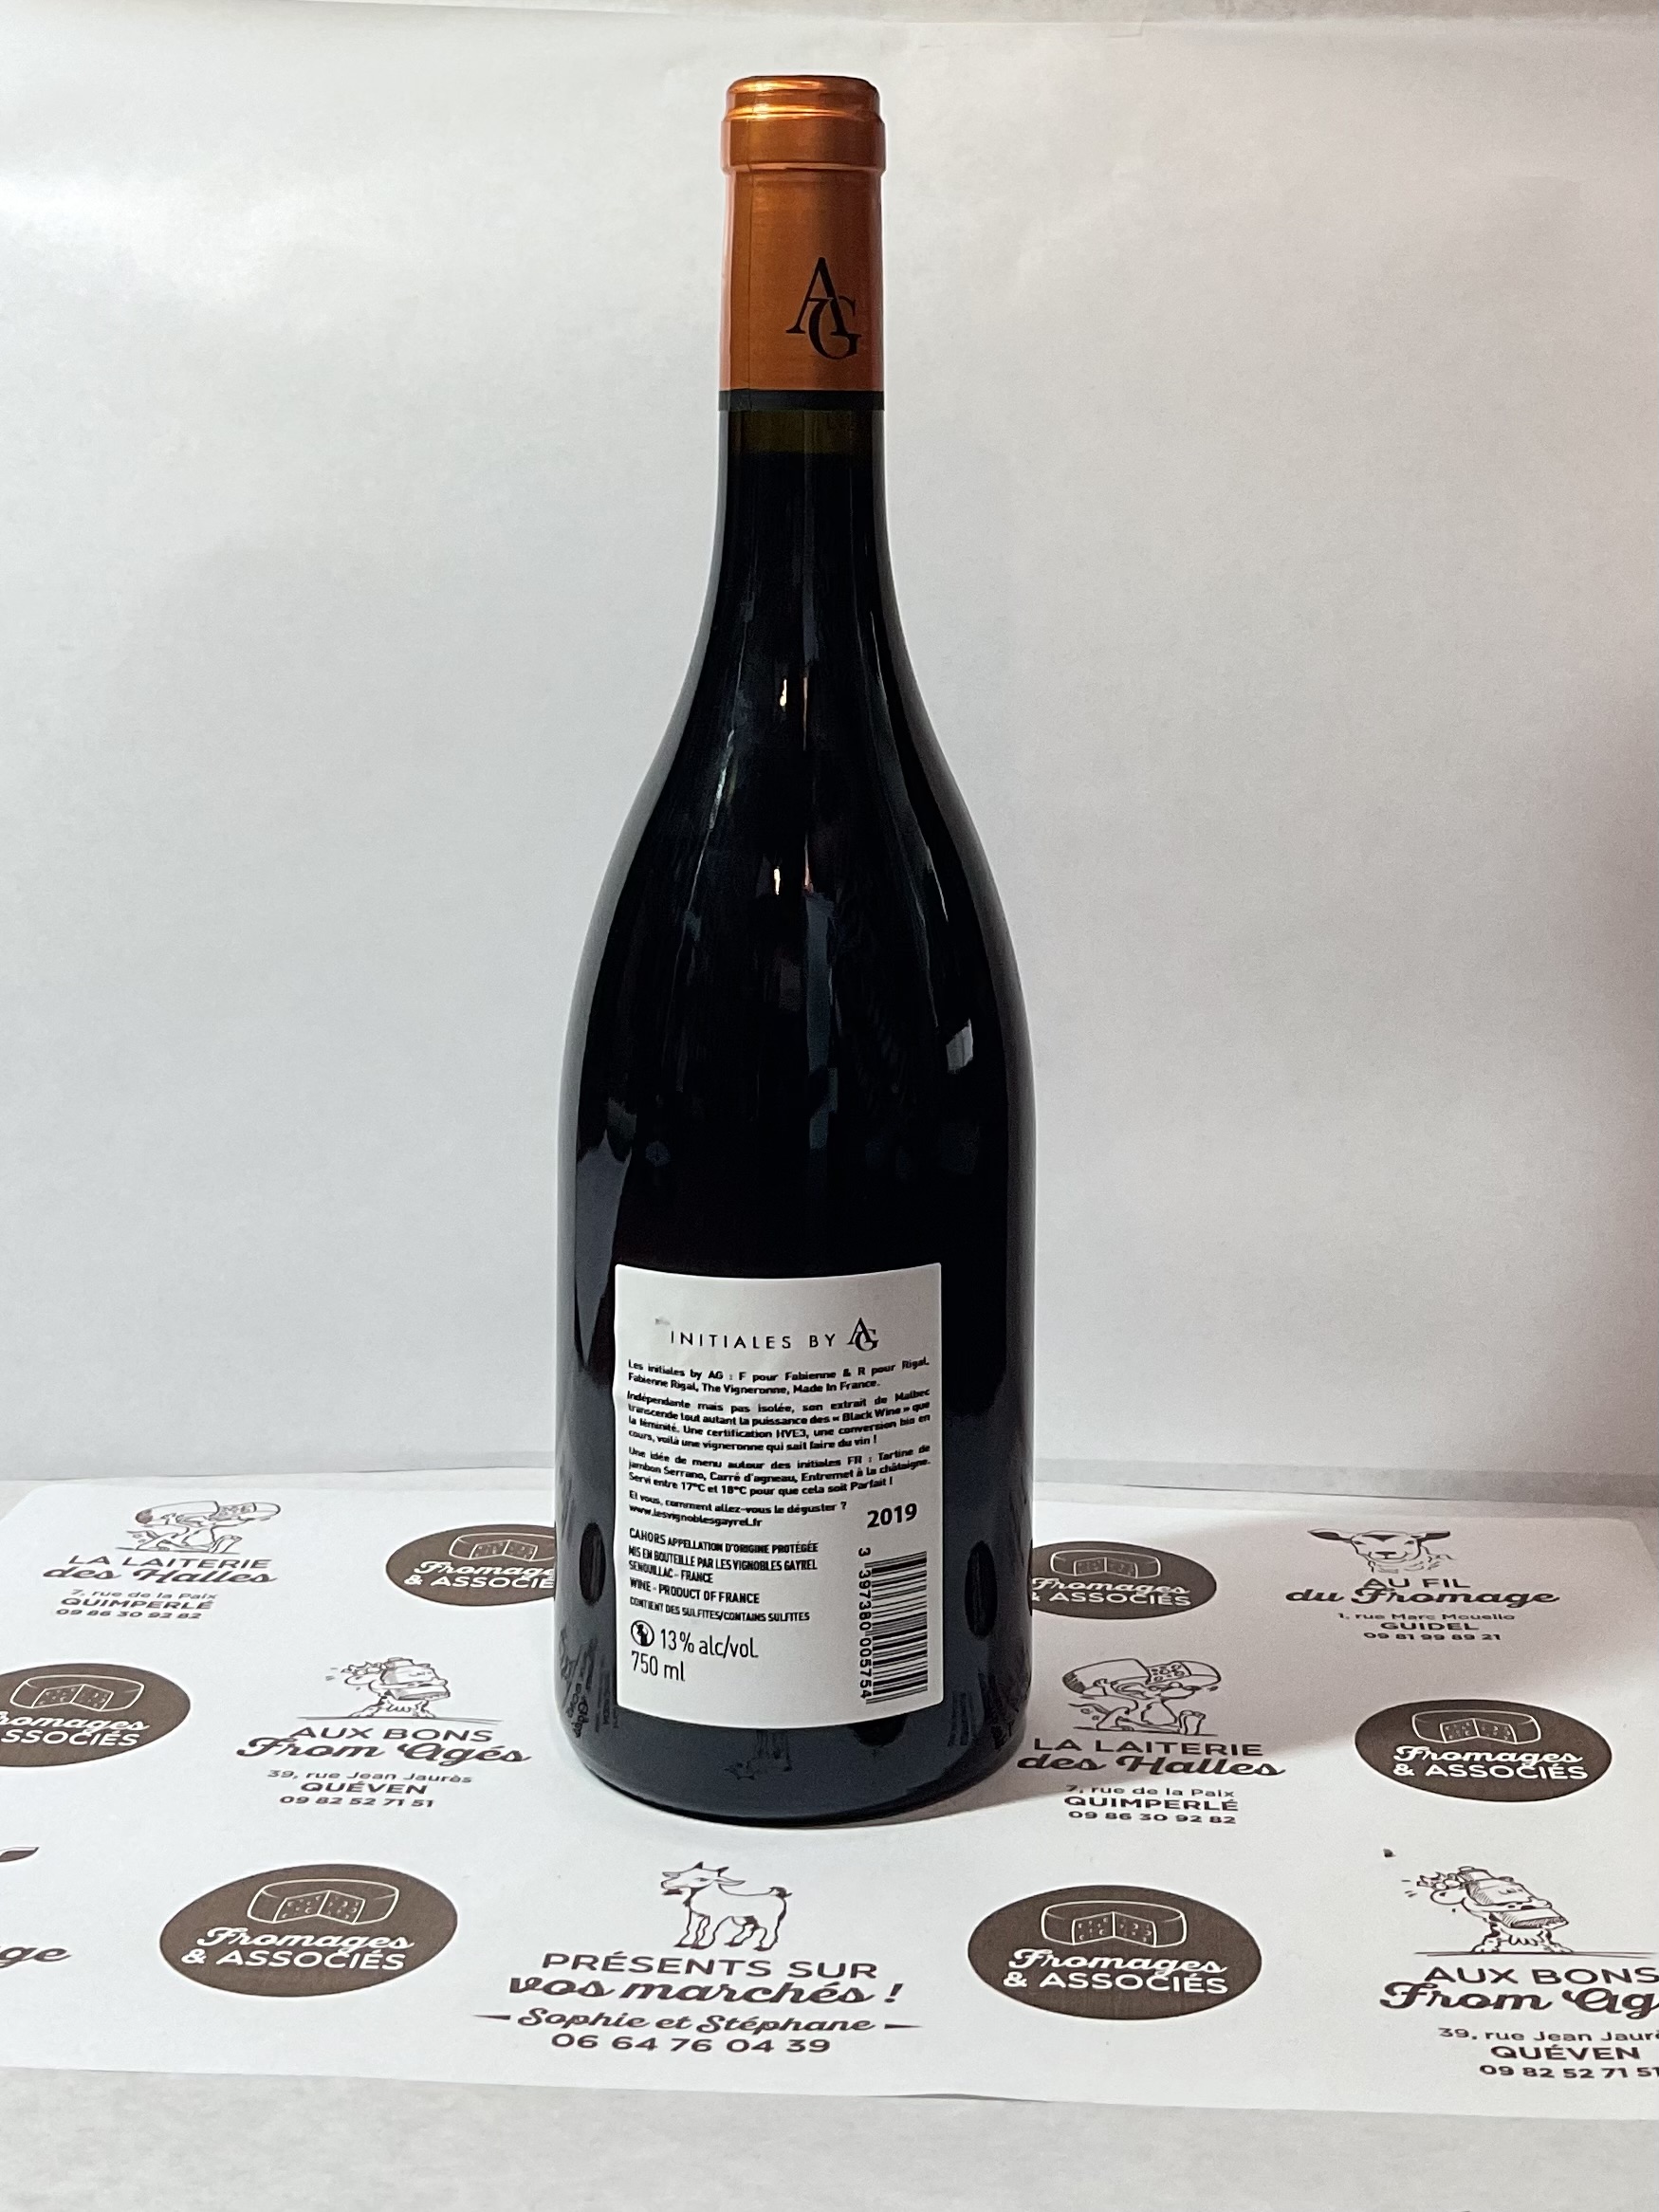 bouteille de vin rouge Initiales Cahors Alain Gayrel 2019